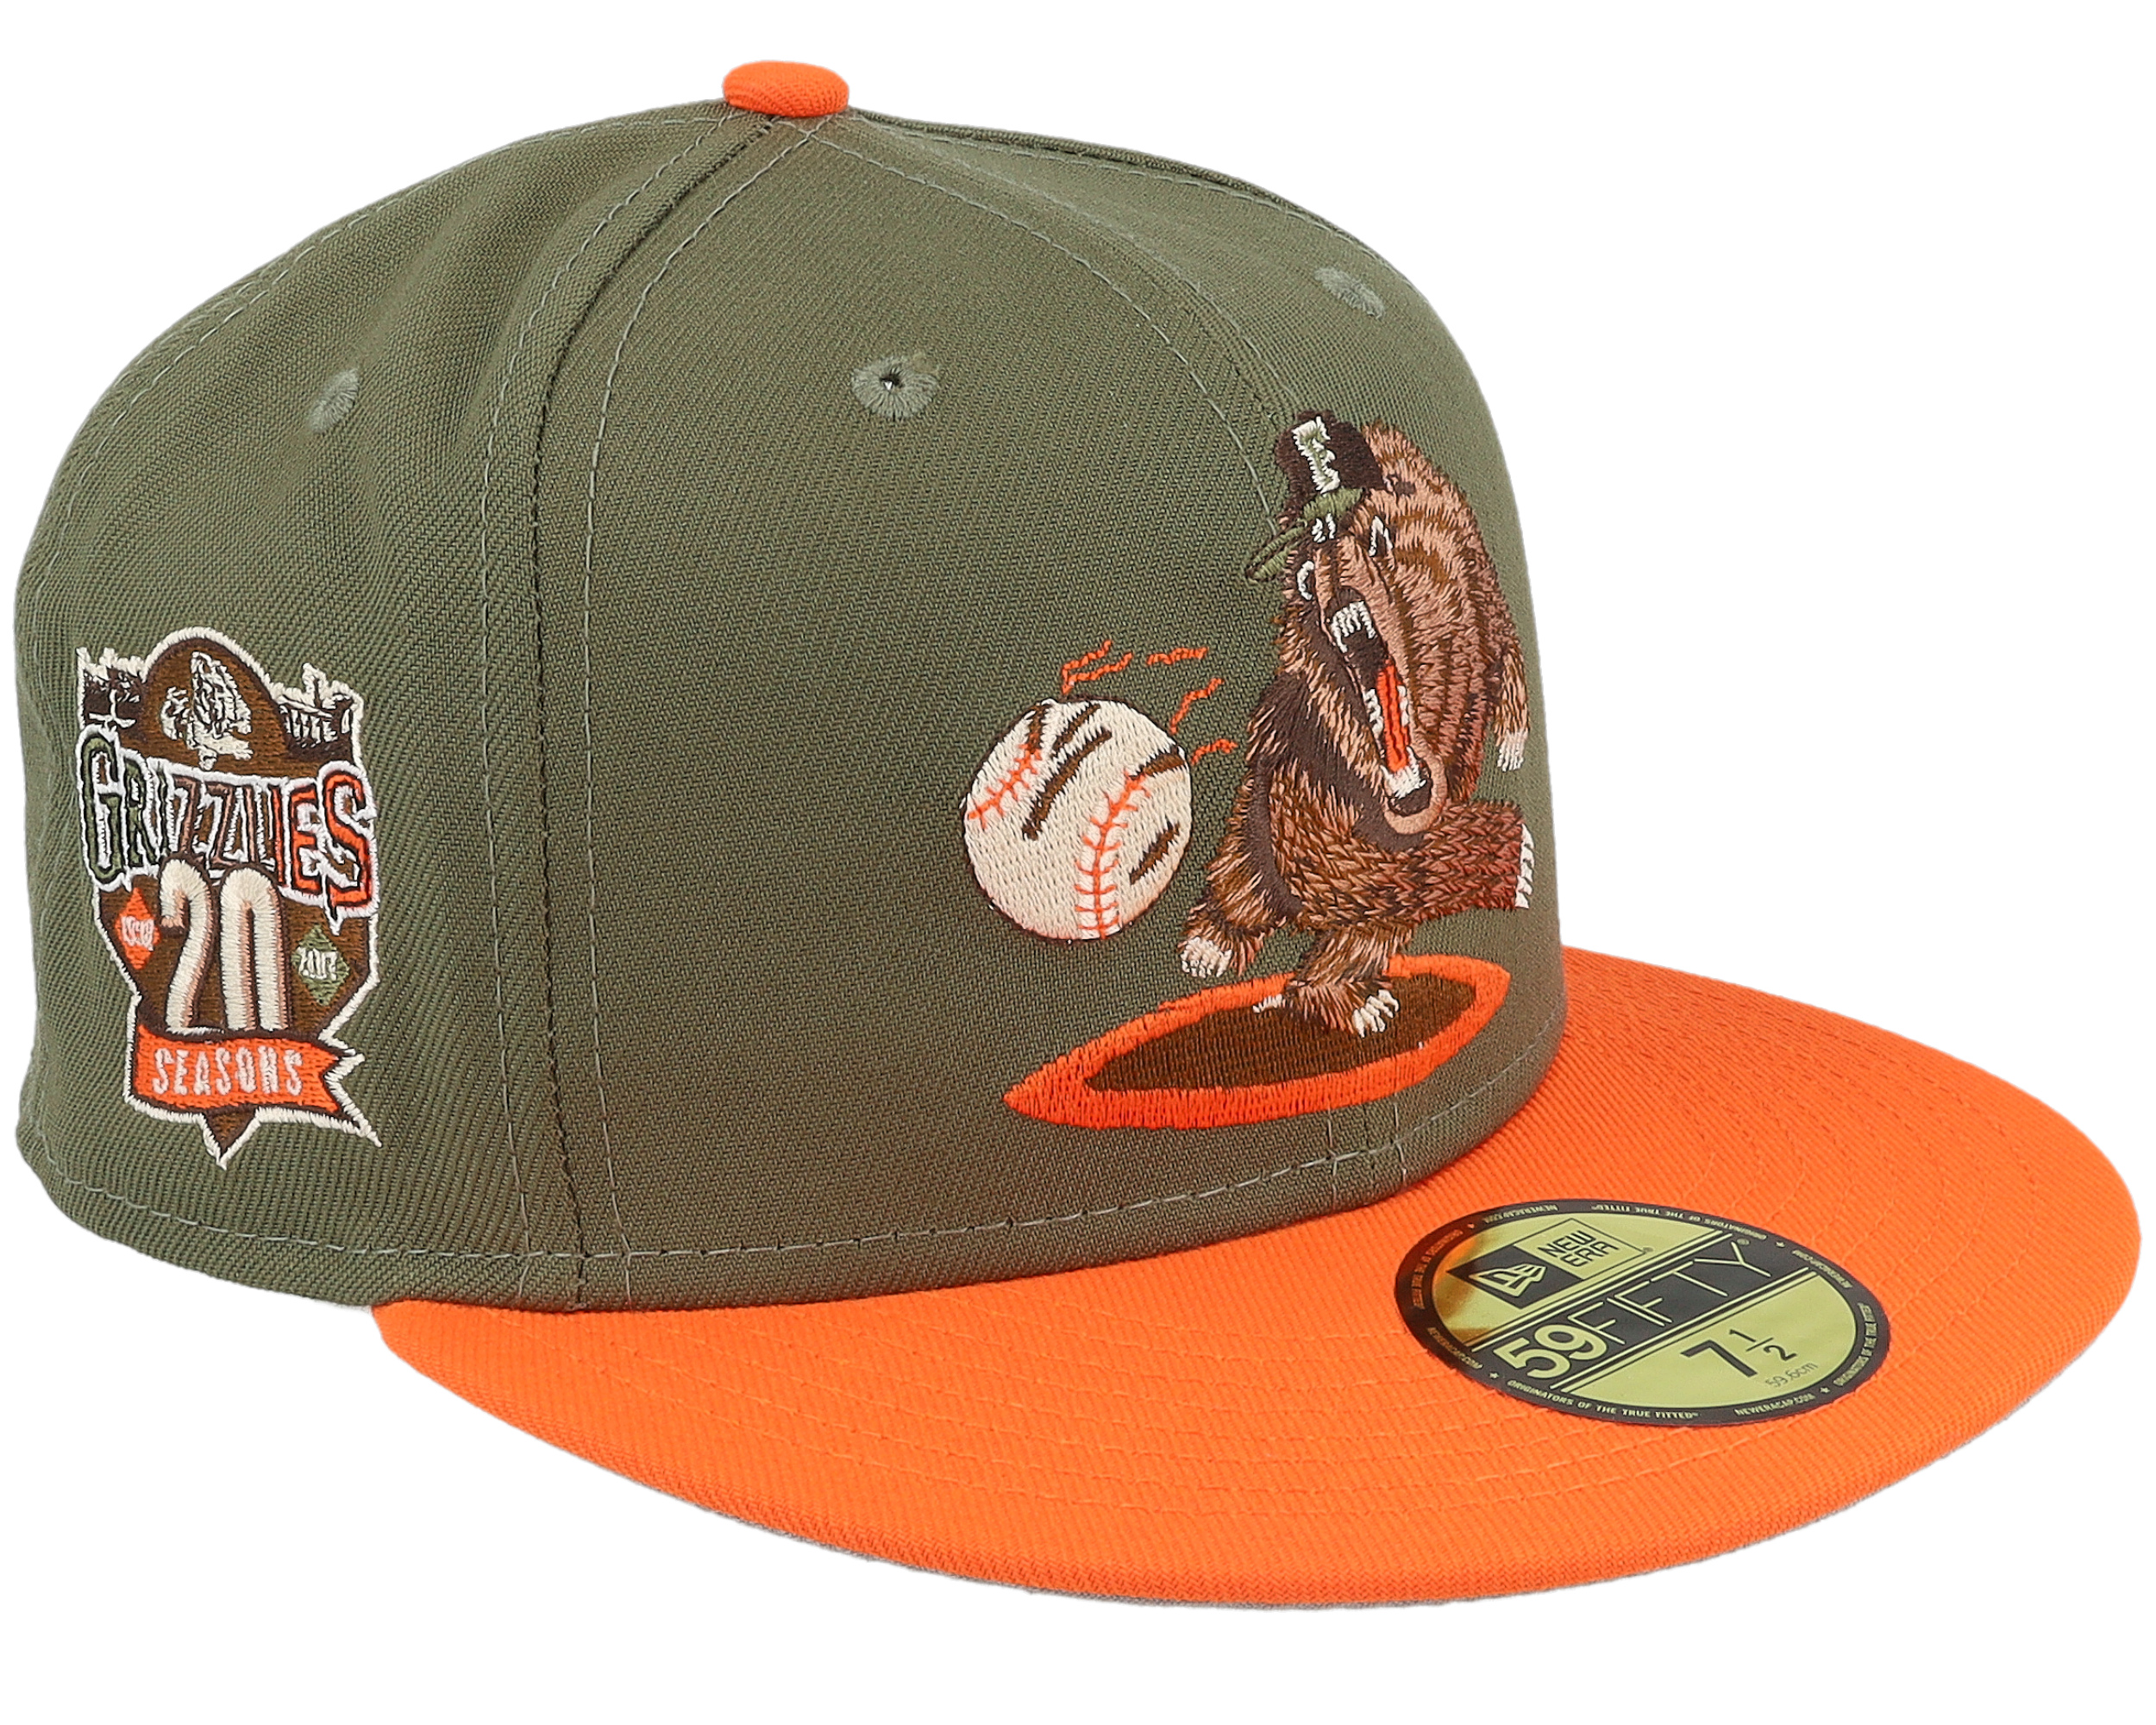 Fresno Grizzlies MiLB Savanna 59FIFTY Olive/Orange Fitted - New Era cap